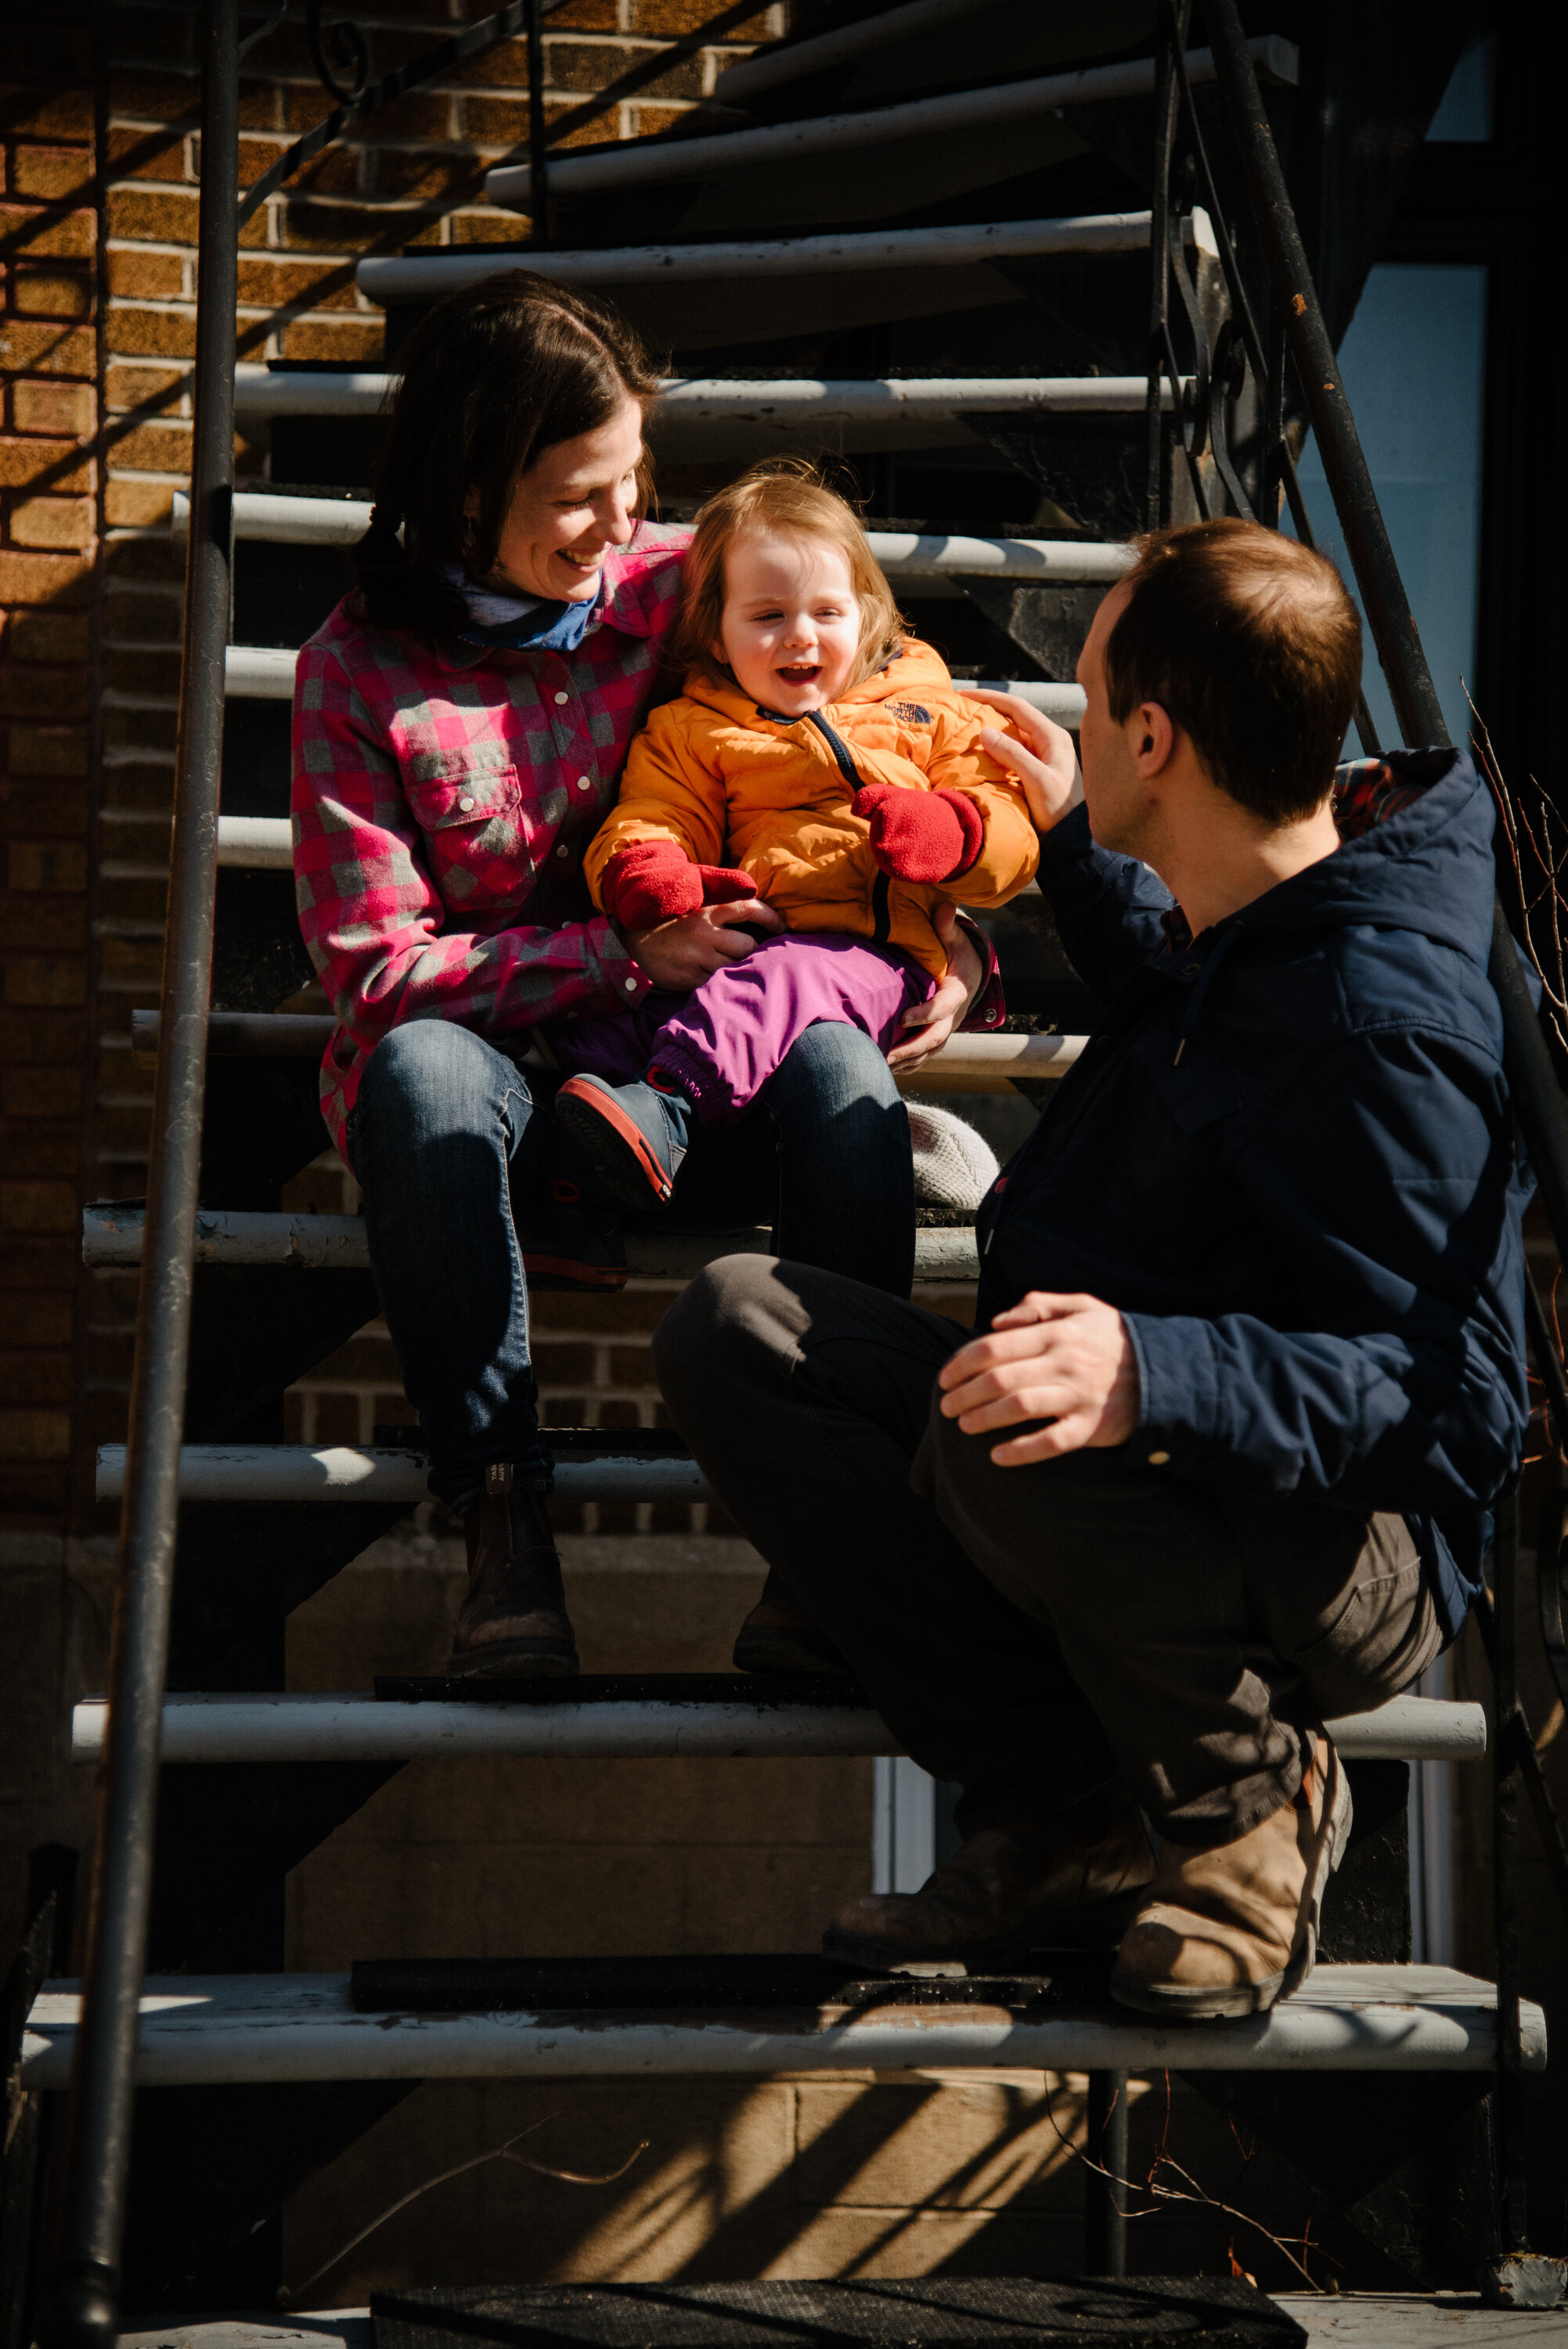 photo-famille-confinee-dans-son-escalier-montrealais-photogrphe-de-famille-a-montreal-marianne-charland-1.jpg